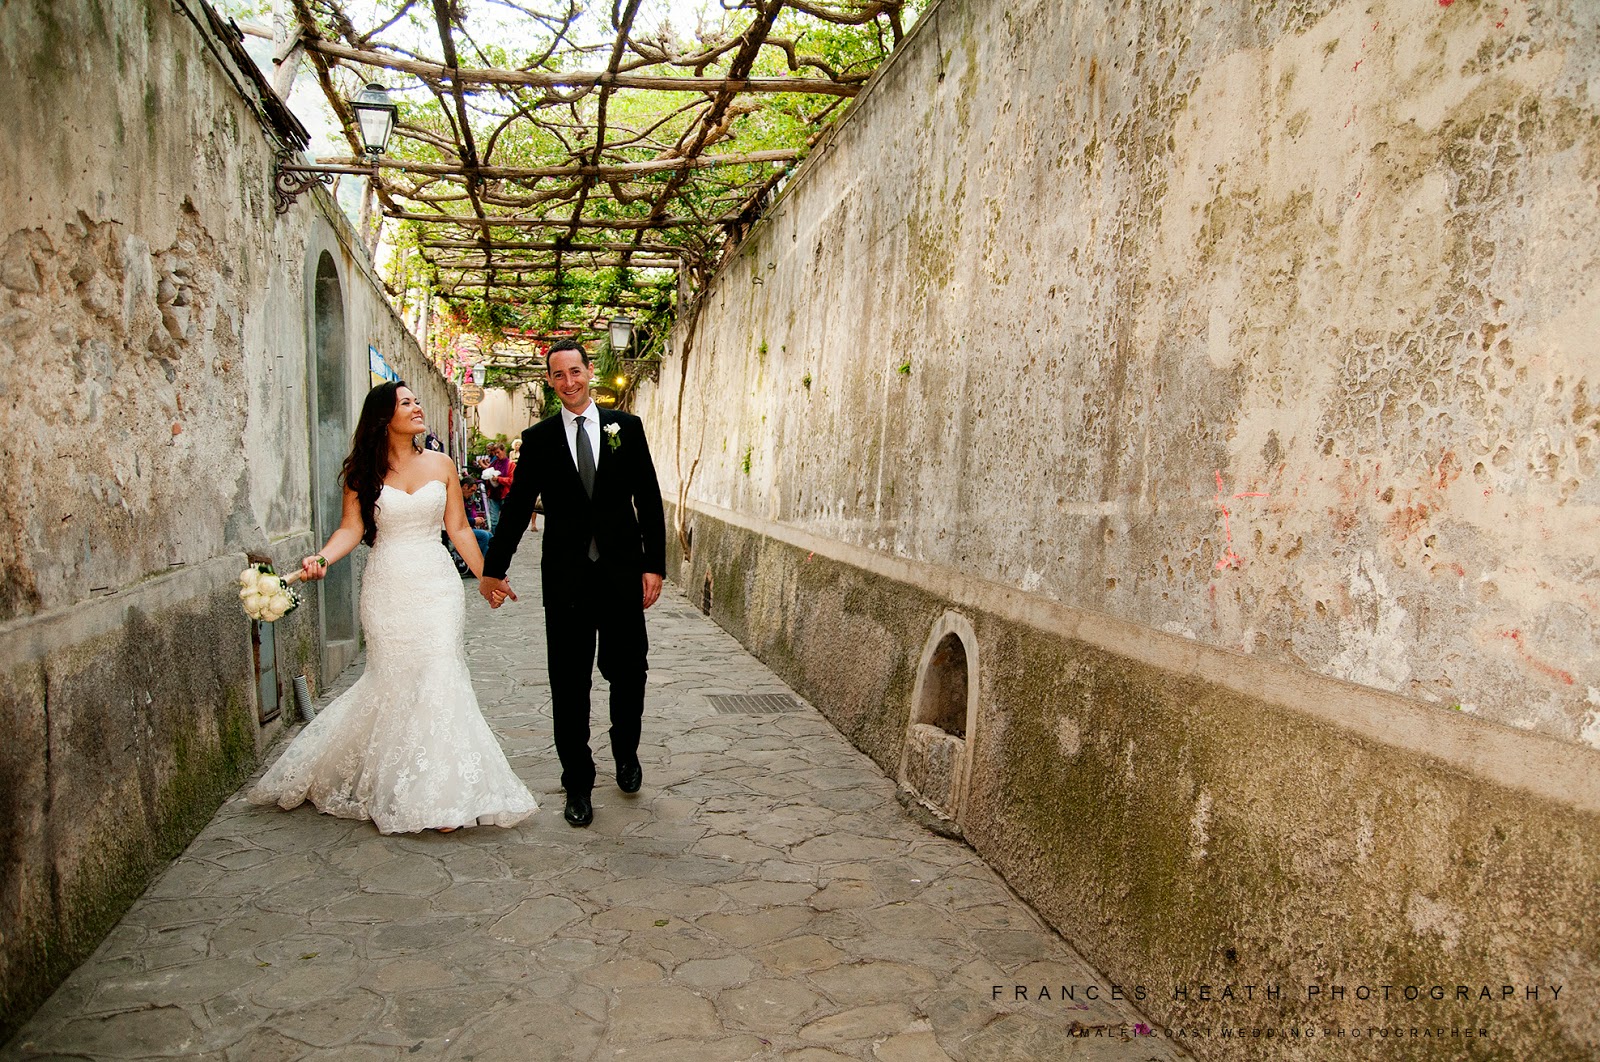 Bride and groom walking in Positano